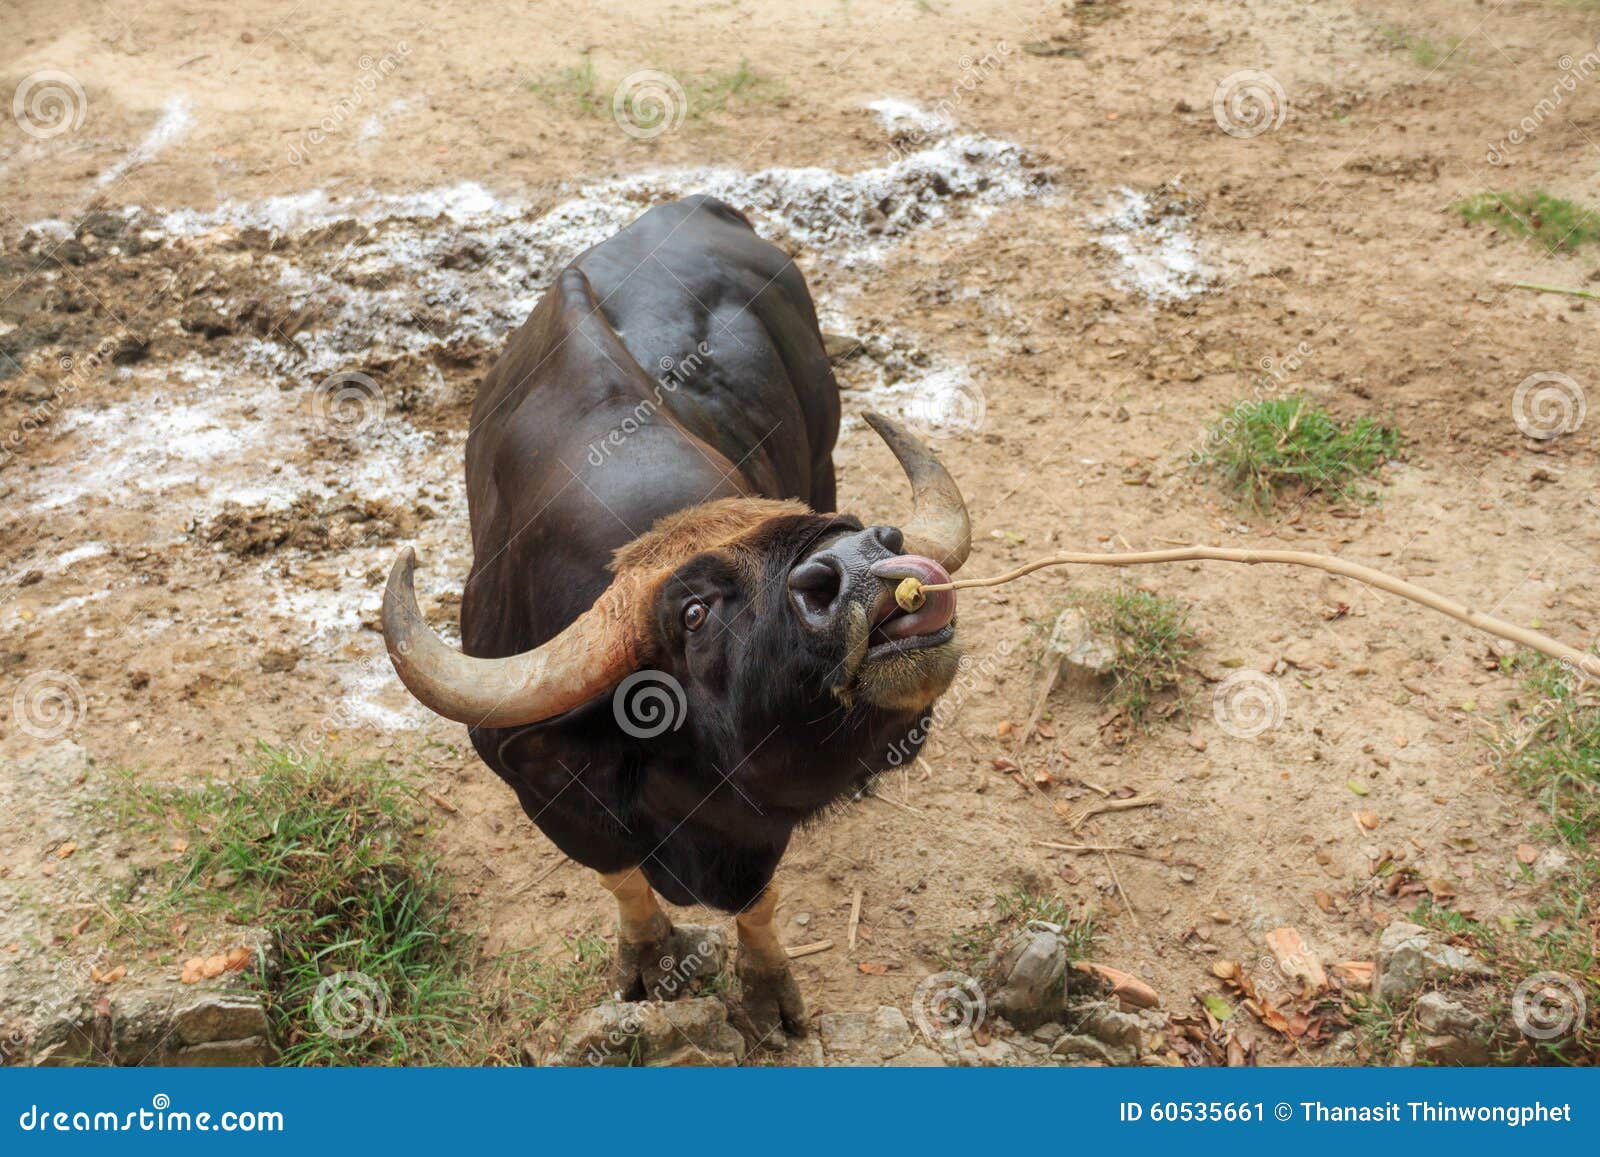 Animal feeding black cow, stock image. Image of farm - 60535661